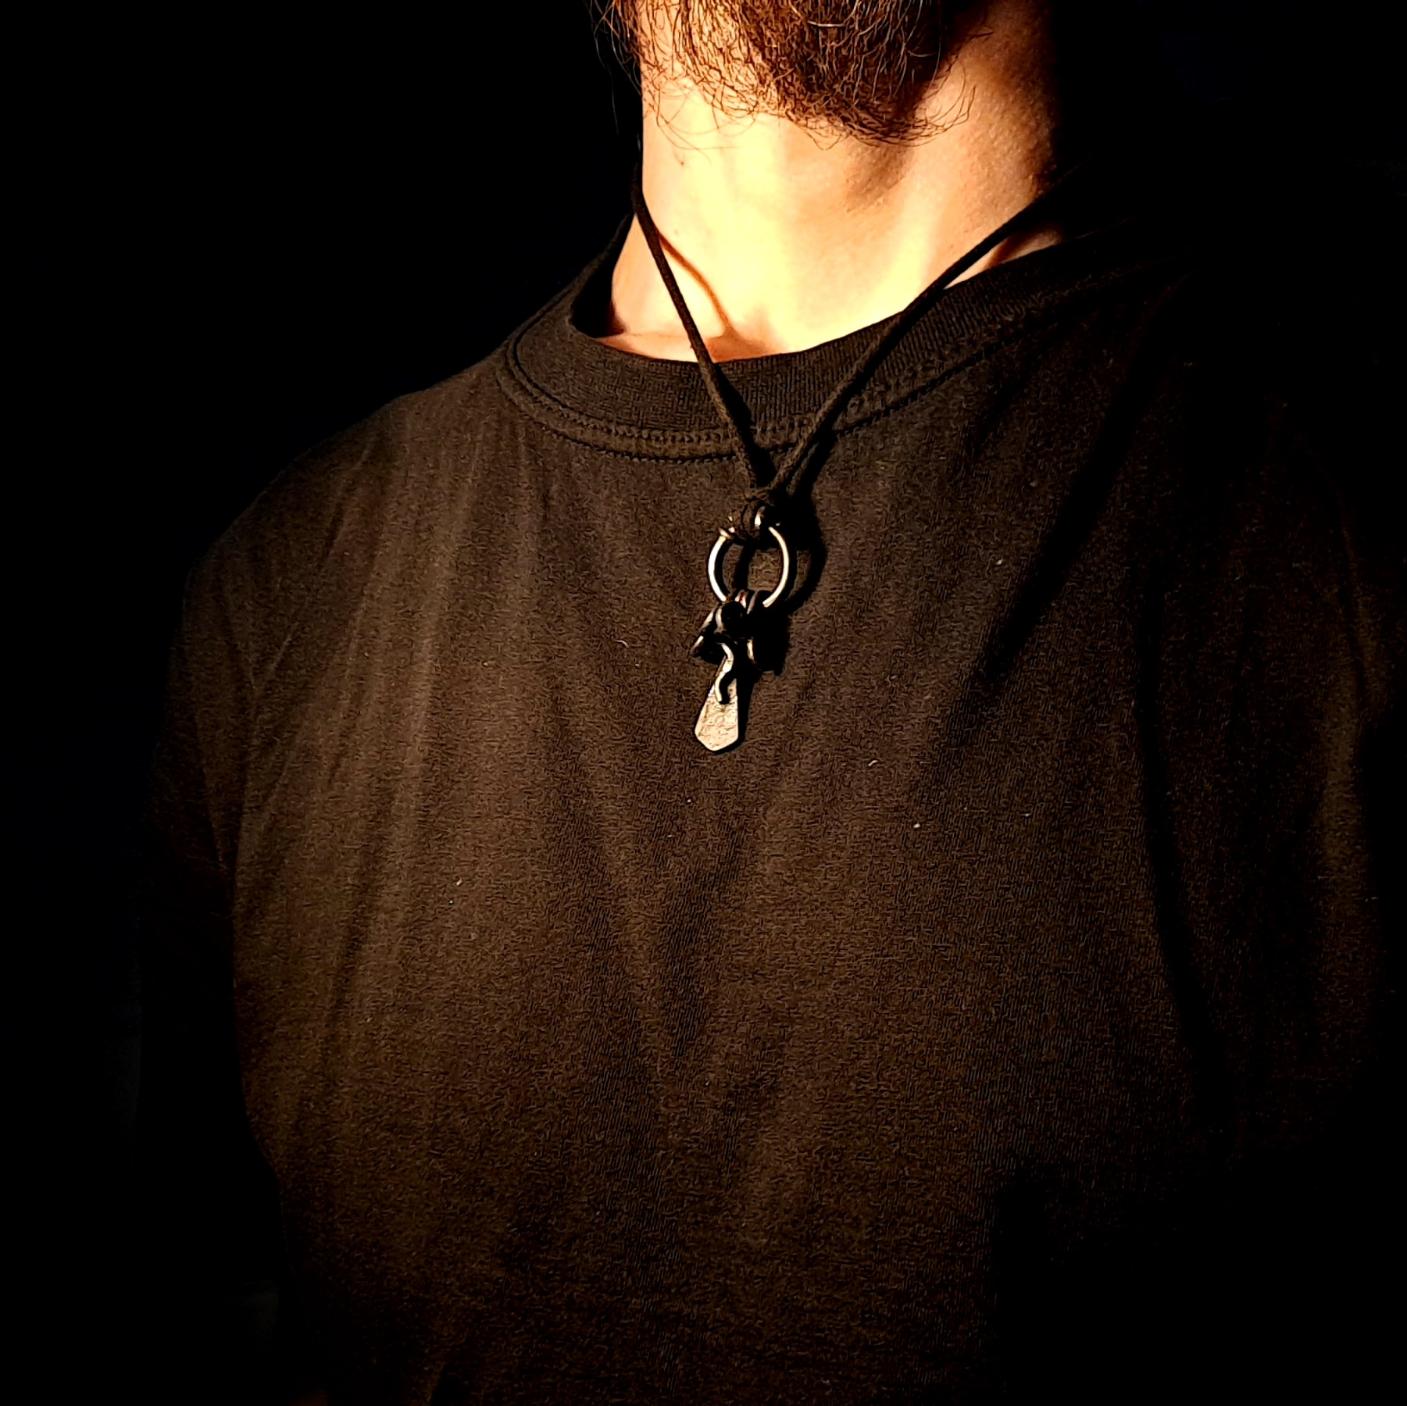 model wearing a völva pendant